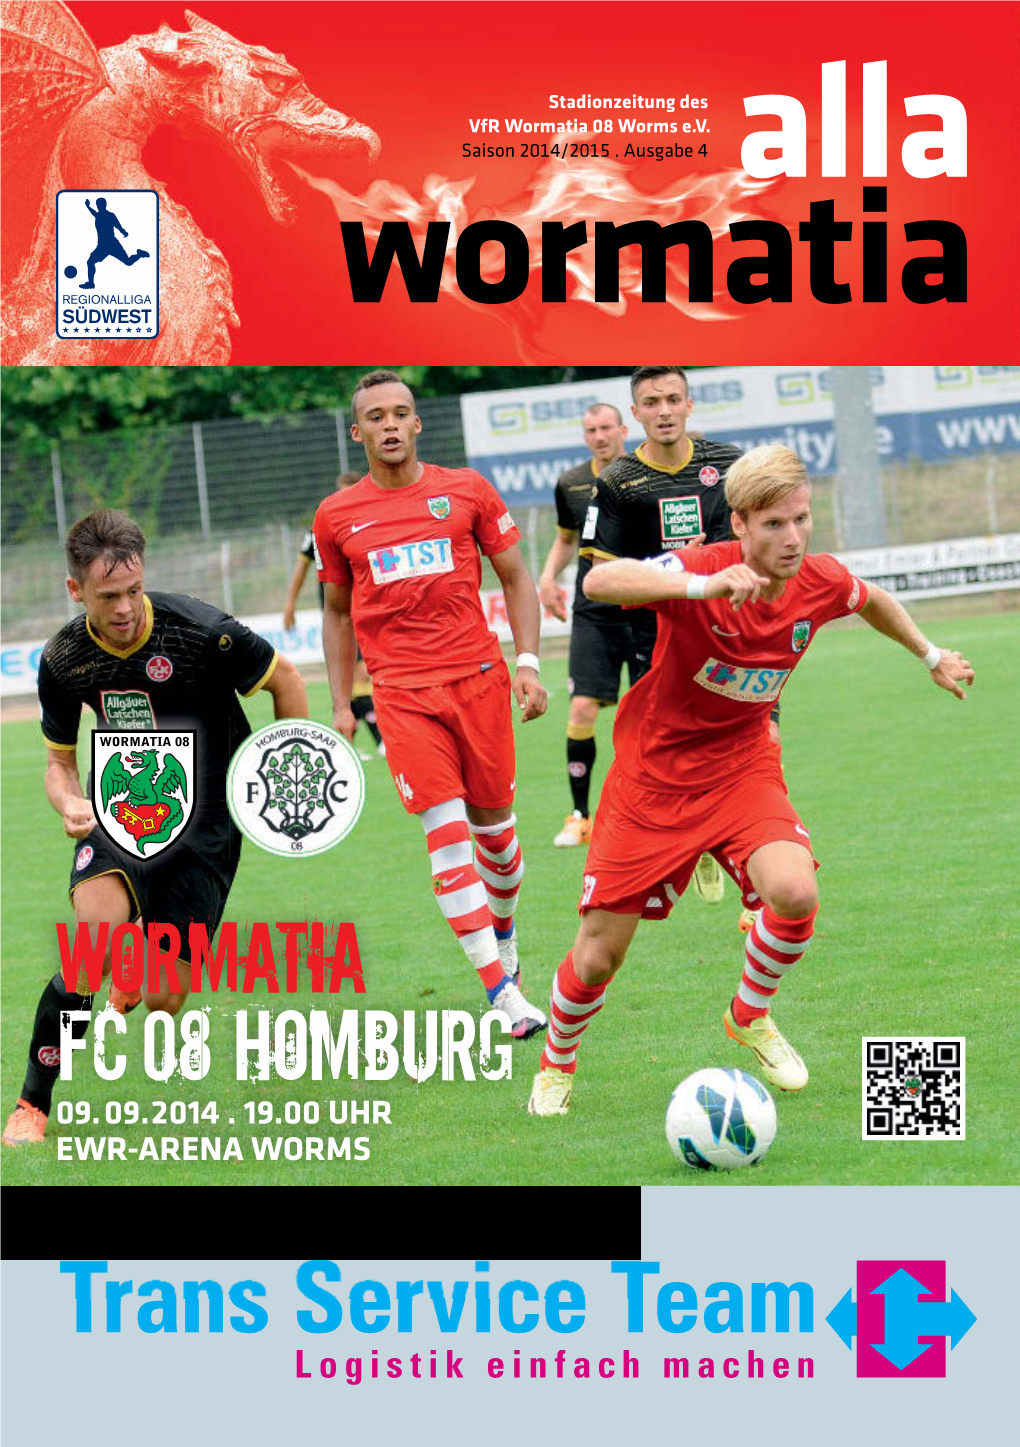 Wormatia Fc 08 Homburg 09.09.2014